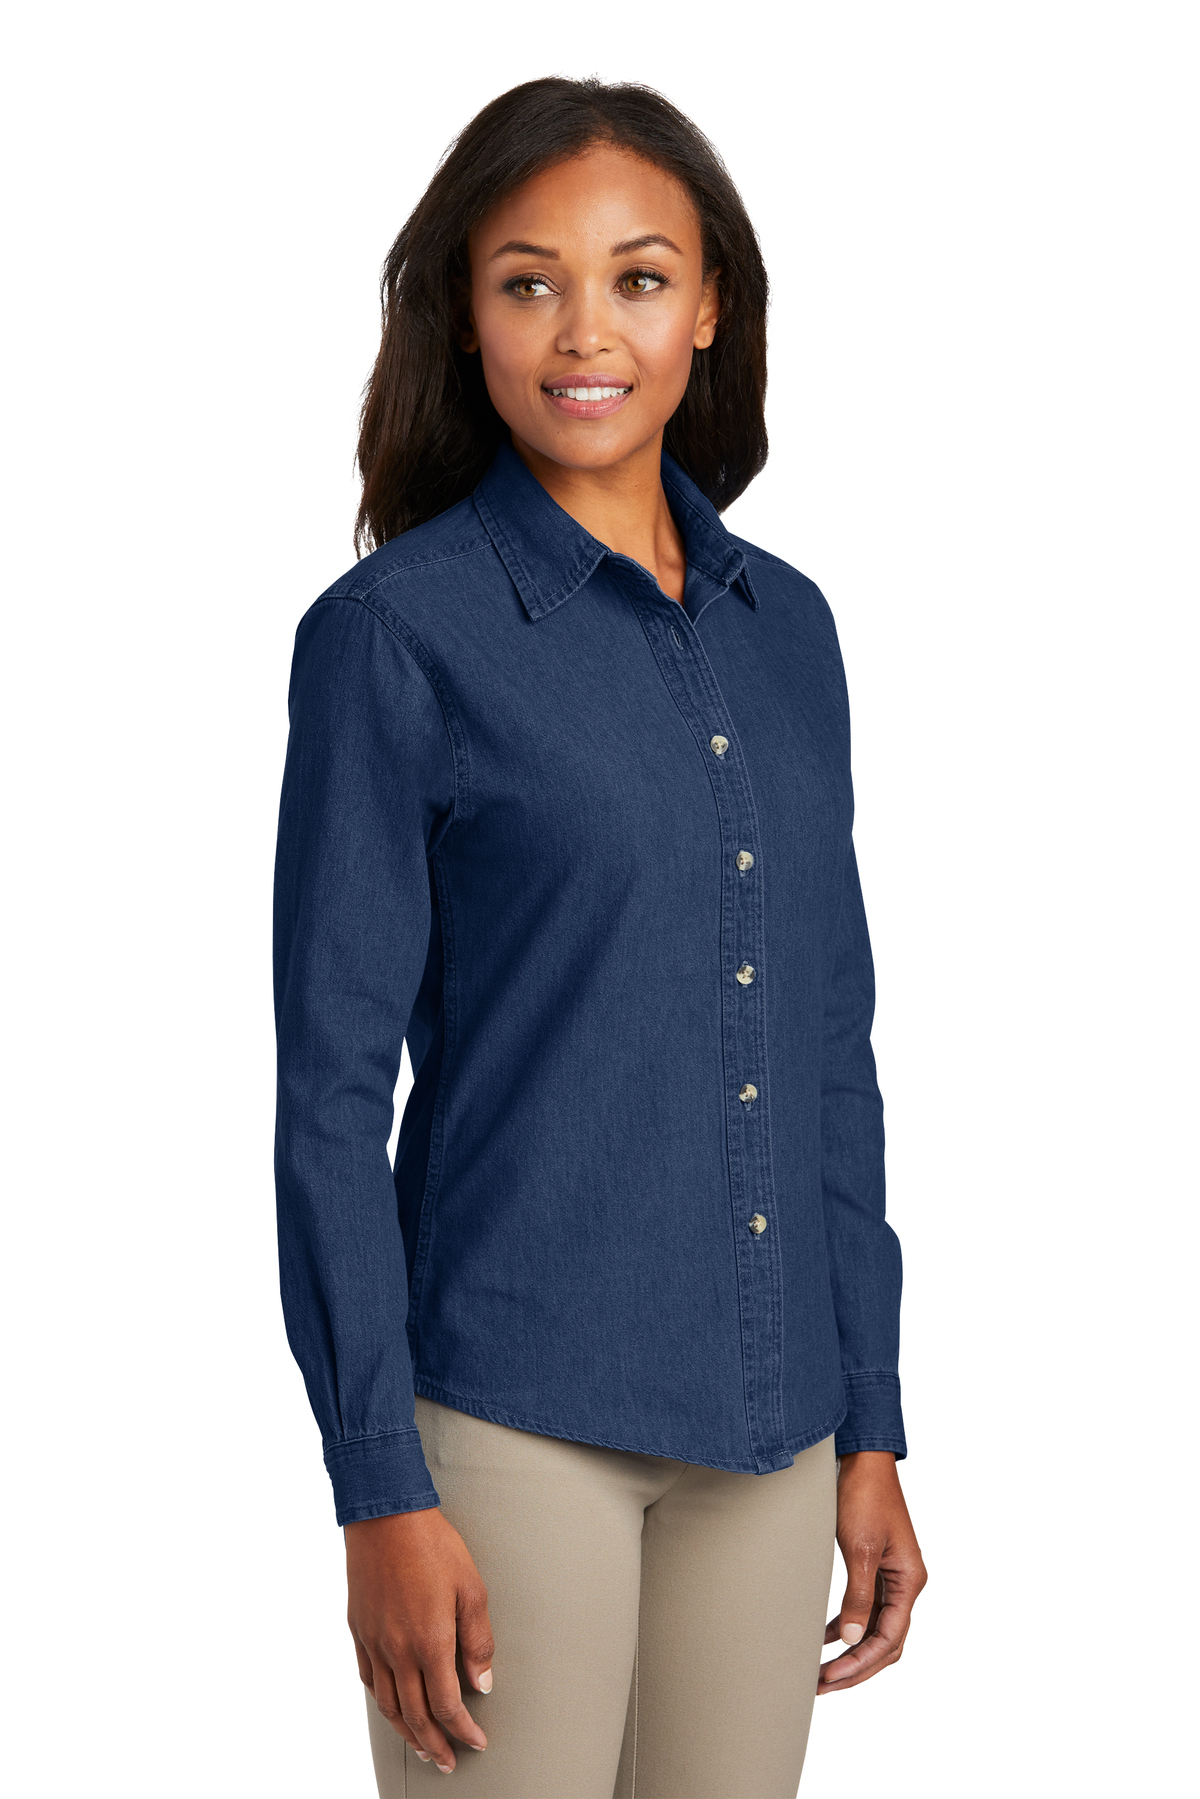 Port & Company - Ladies Long Sleeve Value Denim Shirt, Product